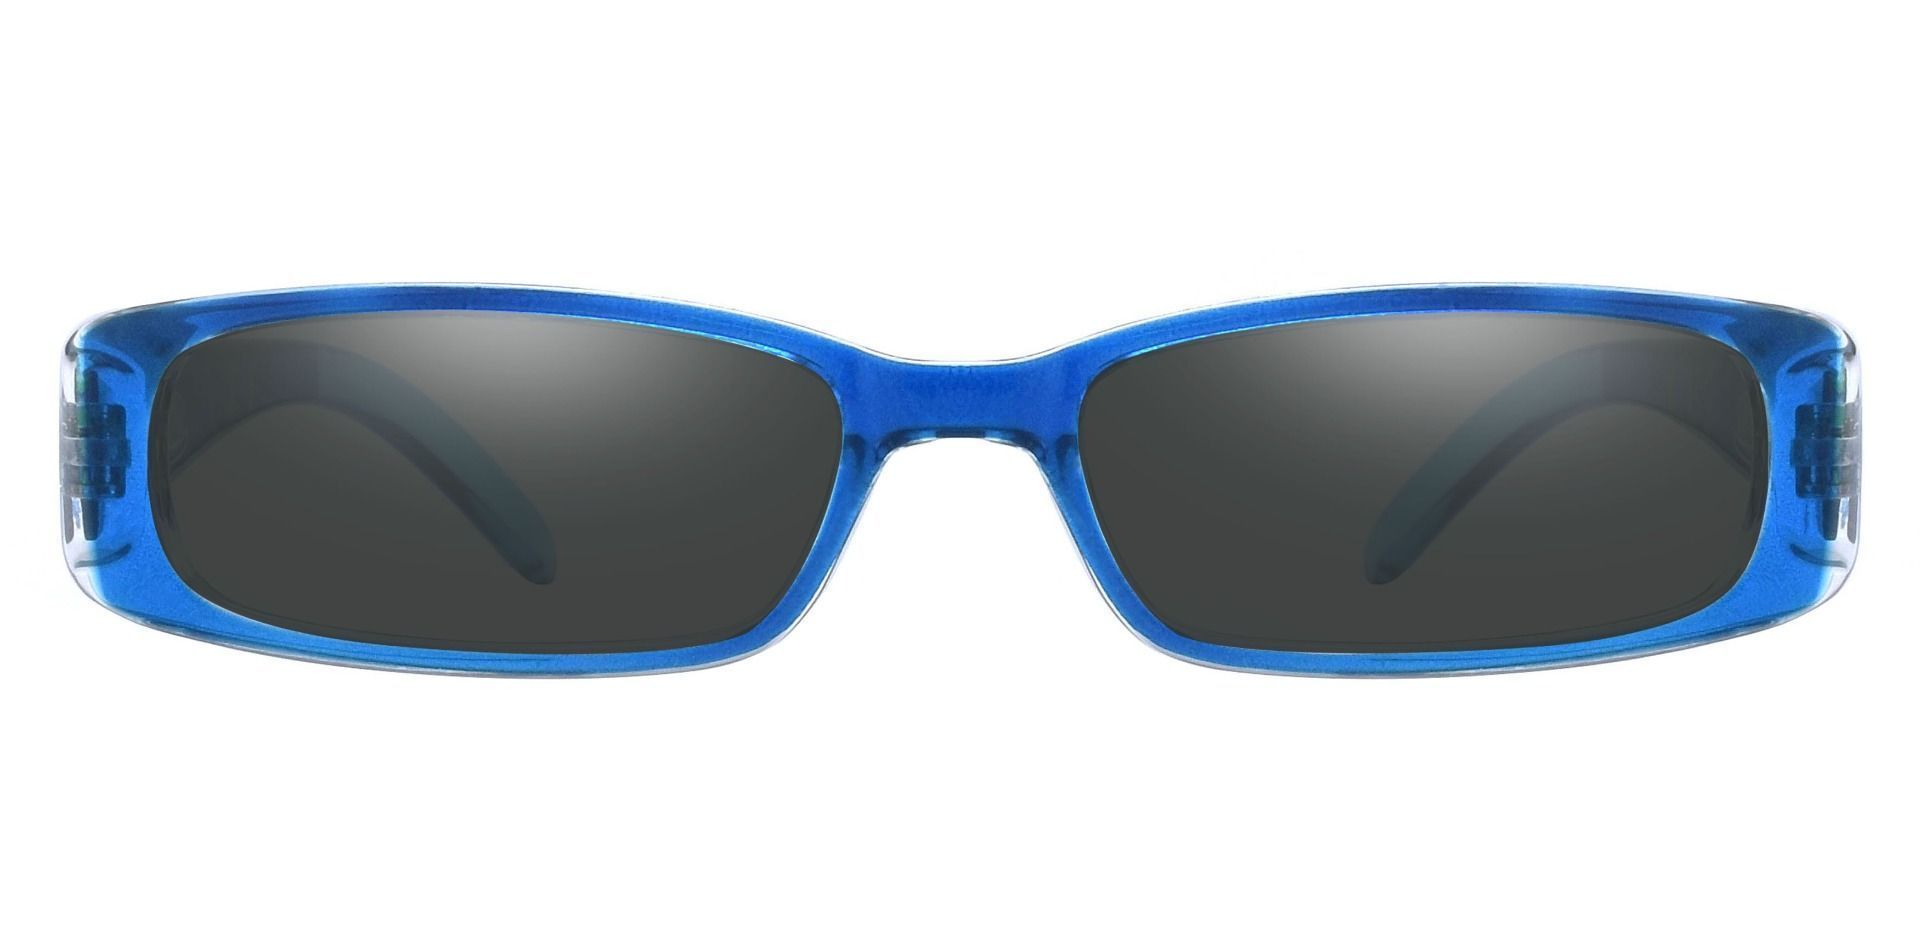 Roz Rectangle Reading Sunglasses - Blue Frame With Gray Lenses | Women ...